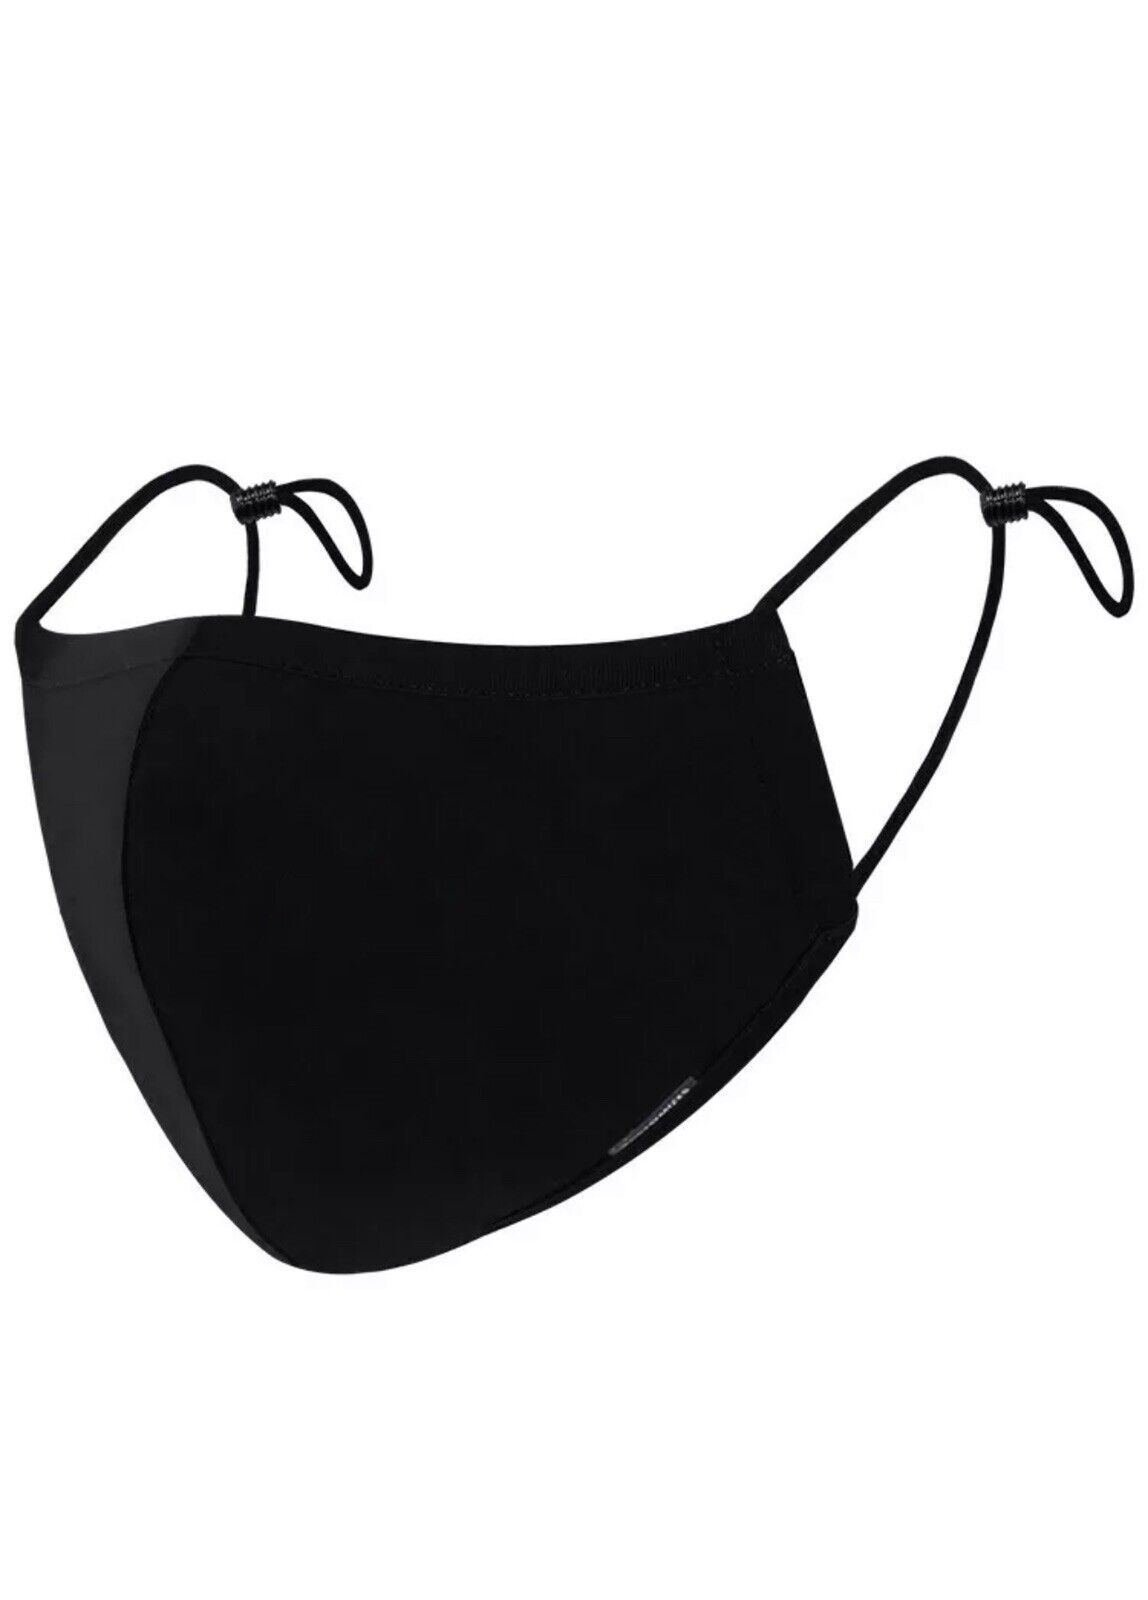 8 Face Masks Black Cotton Adult Mask Adjustable Elastic Loops Washable Reusable Unbranded - фотография #6